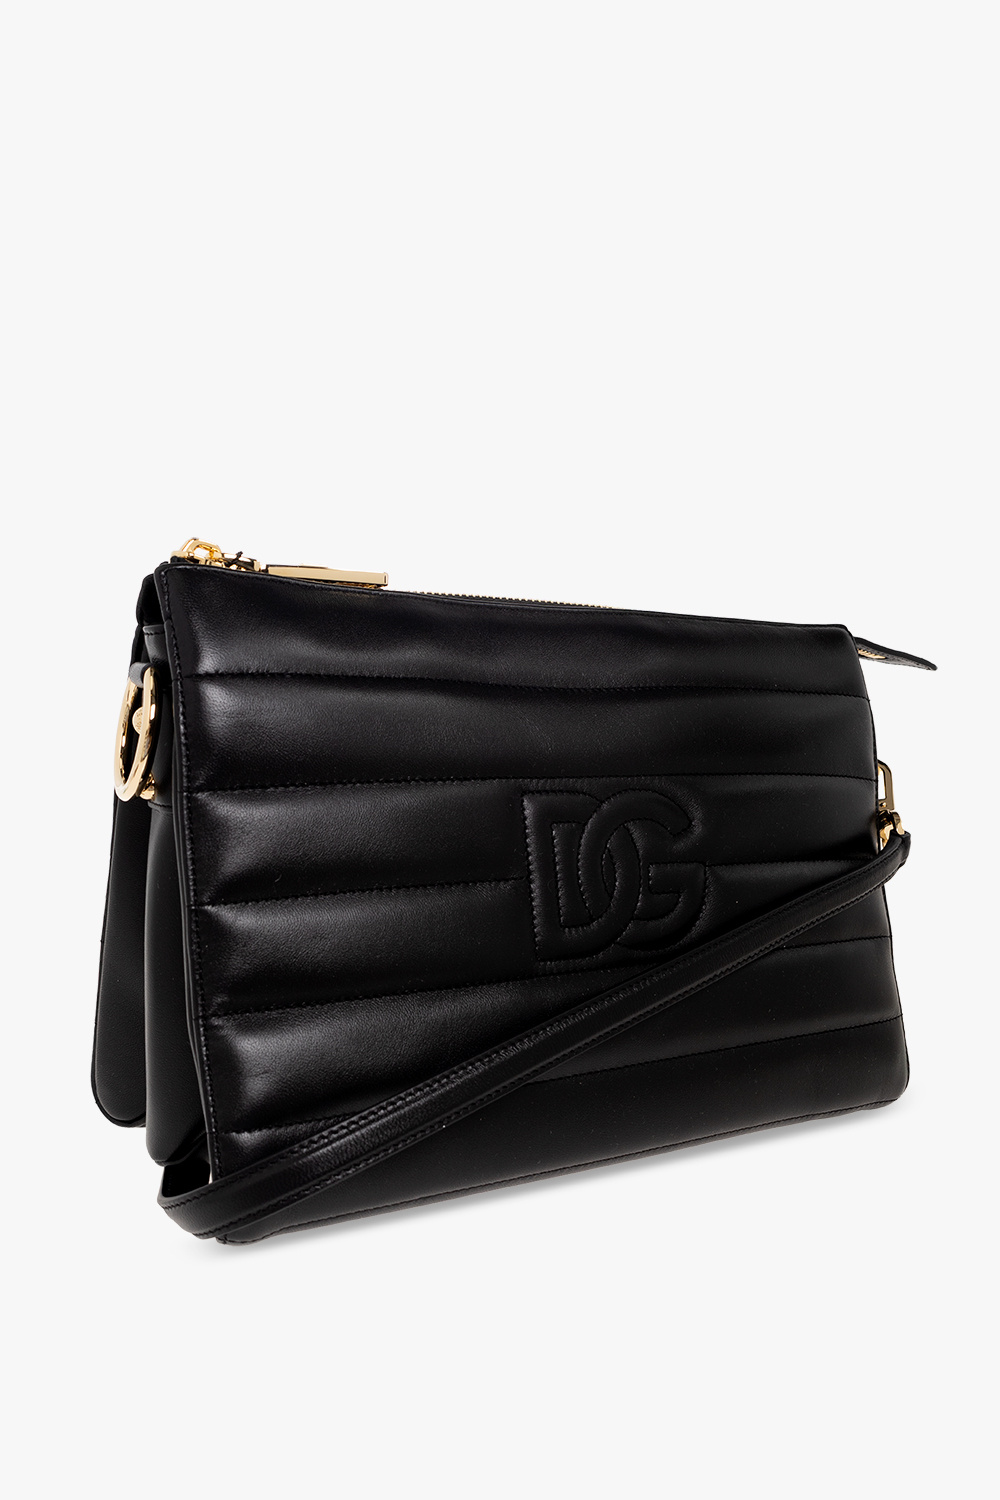 dolce space & Gabbana ‘Tris Medium’ shoulder bag